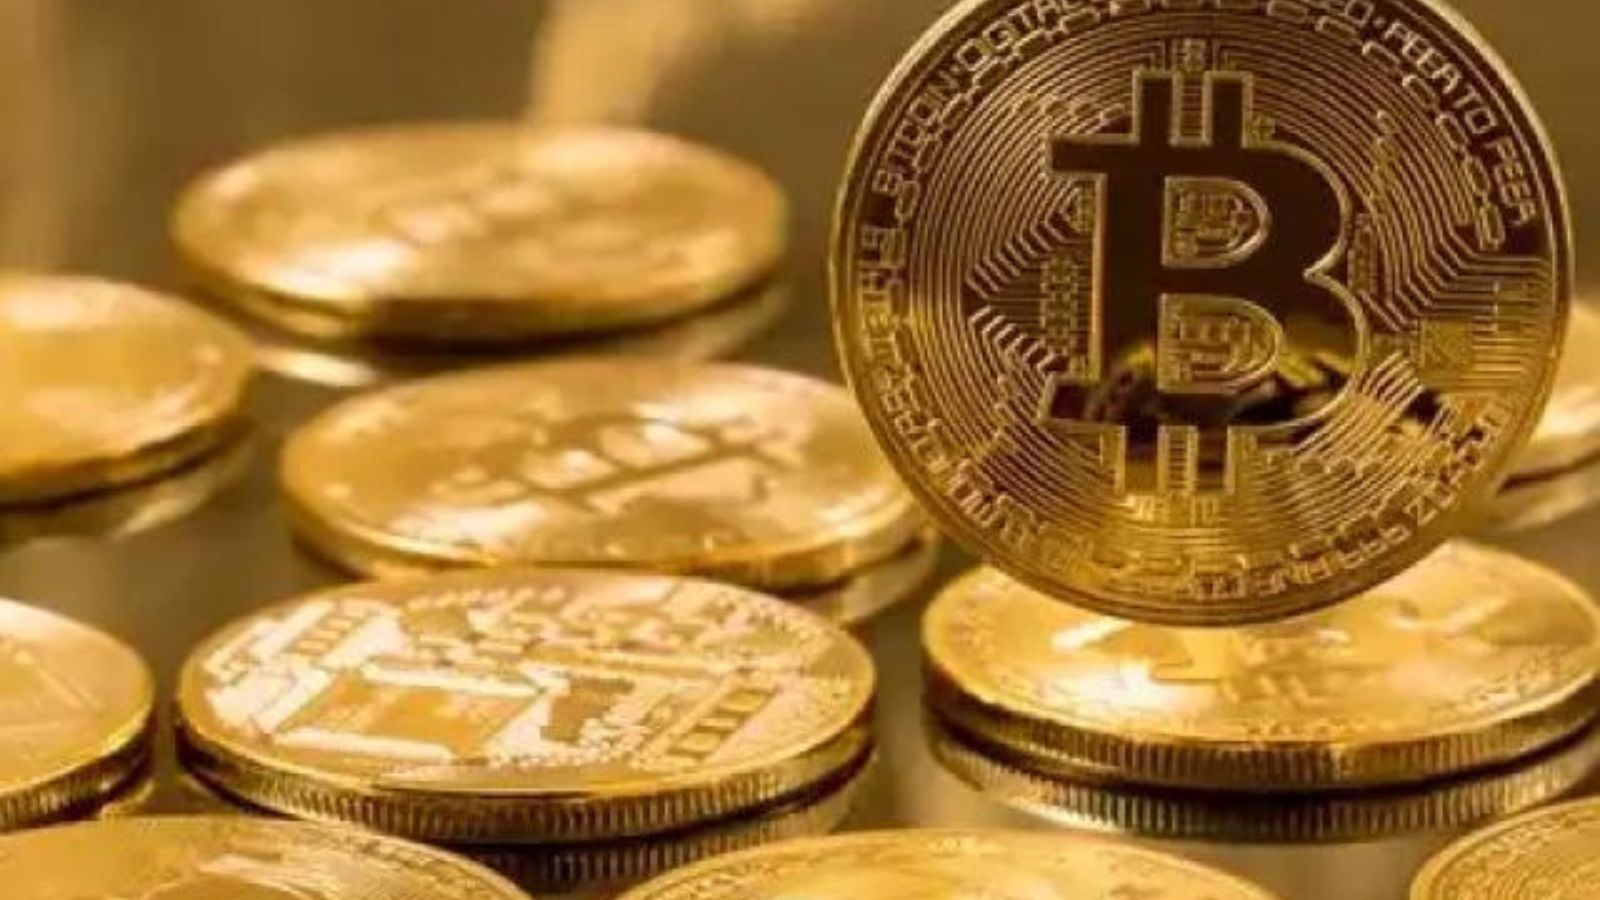 Bitcoin CEO halving bybit milhão reais